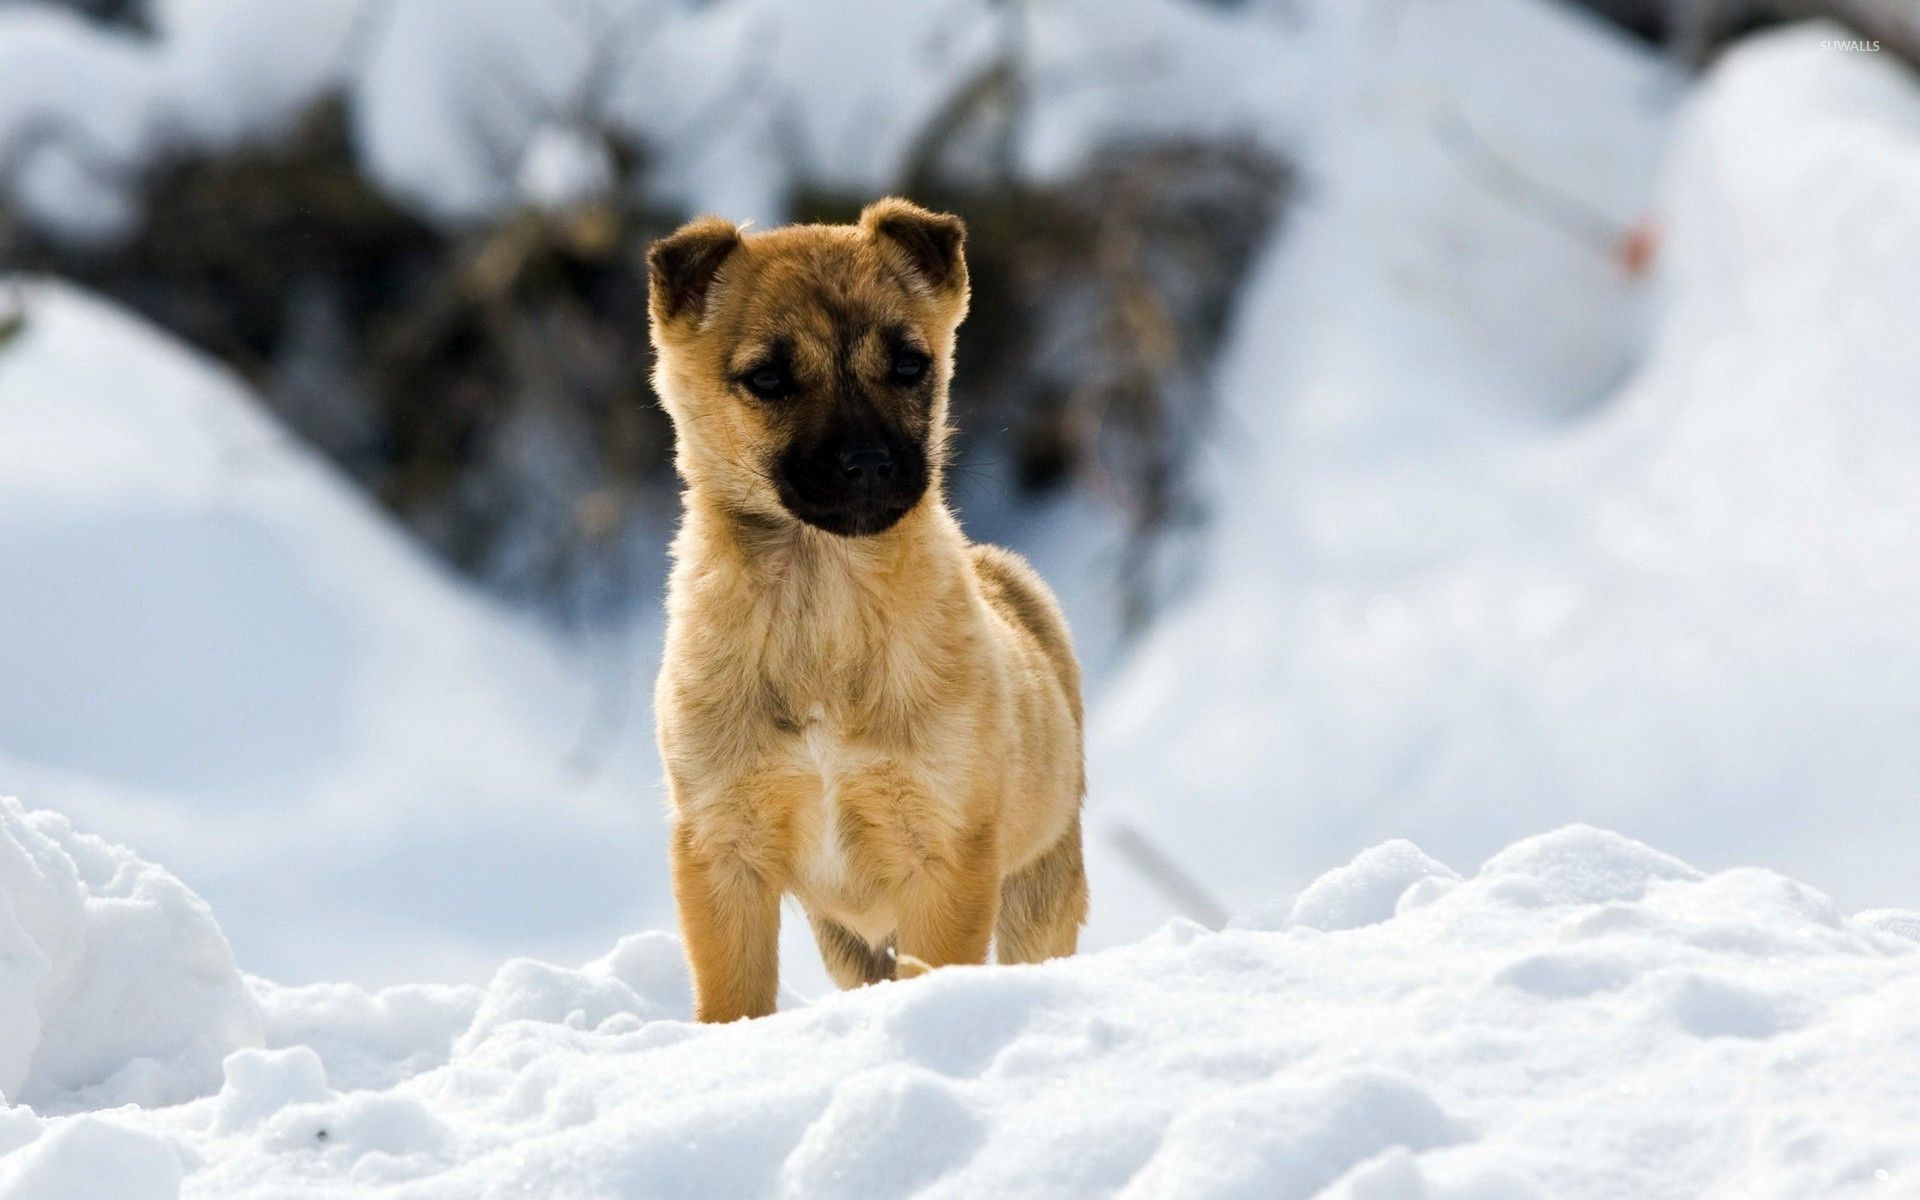 Puppy in the snow wallpaper wallpaper - Animals, Cute animals, Snow animals